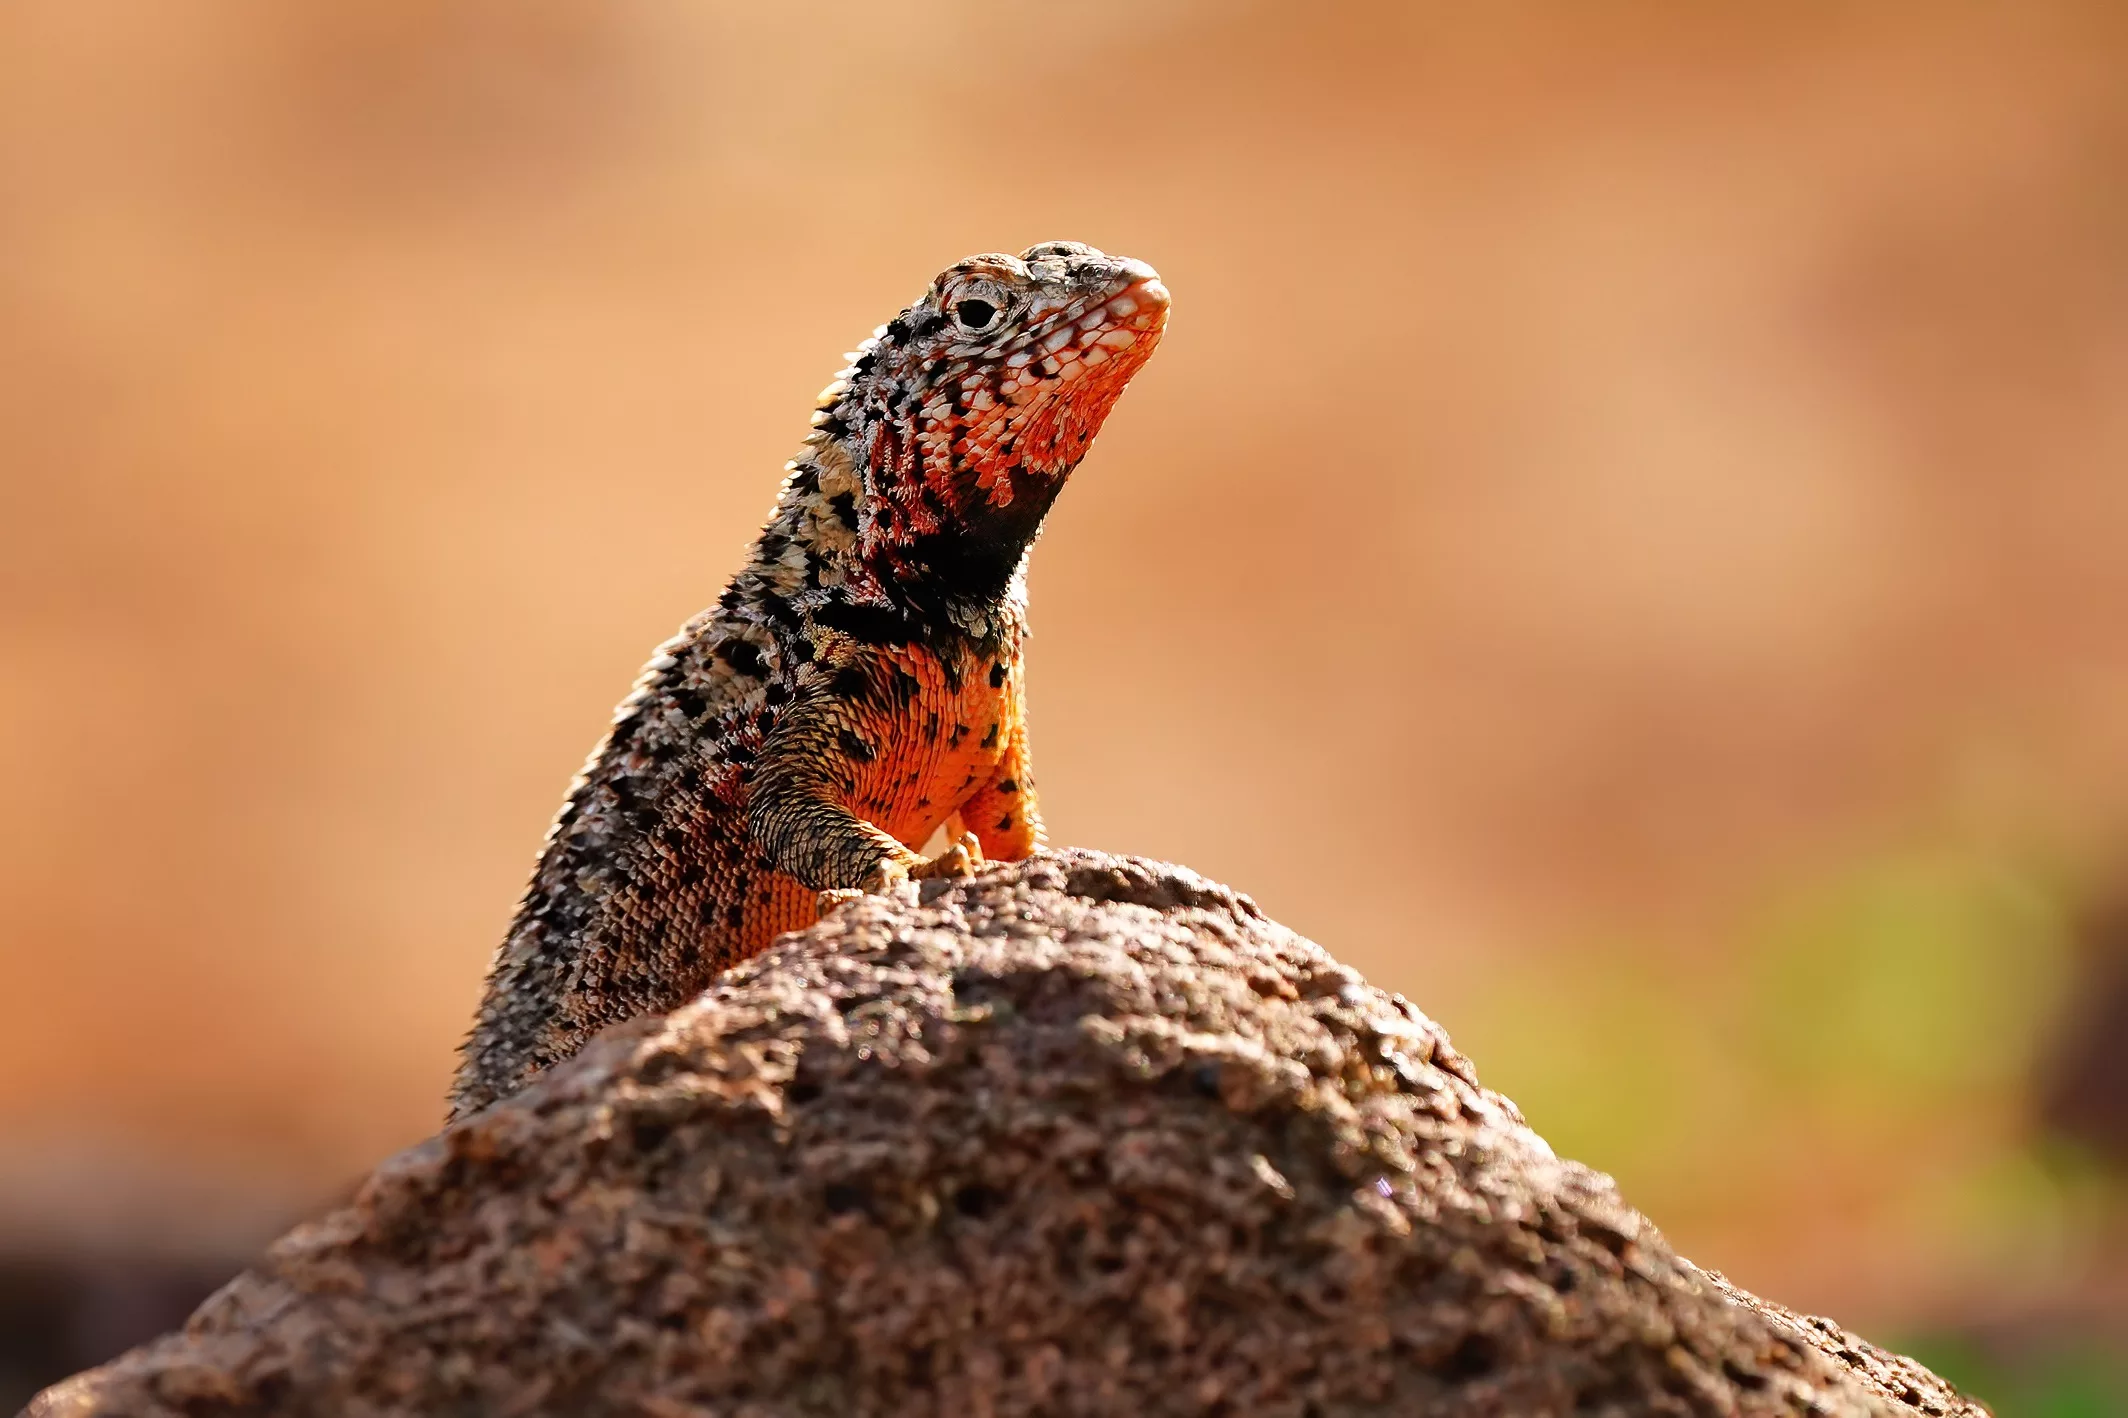 Galapagos Photography Experience - Lava lizard